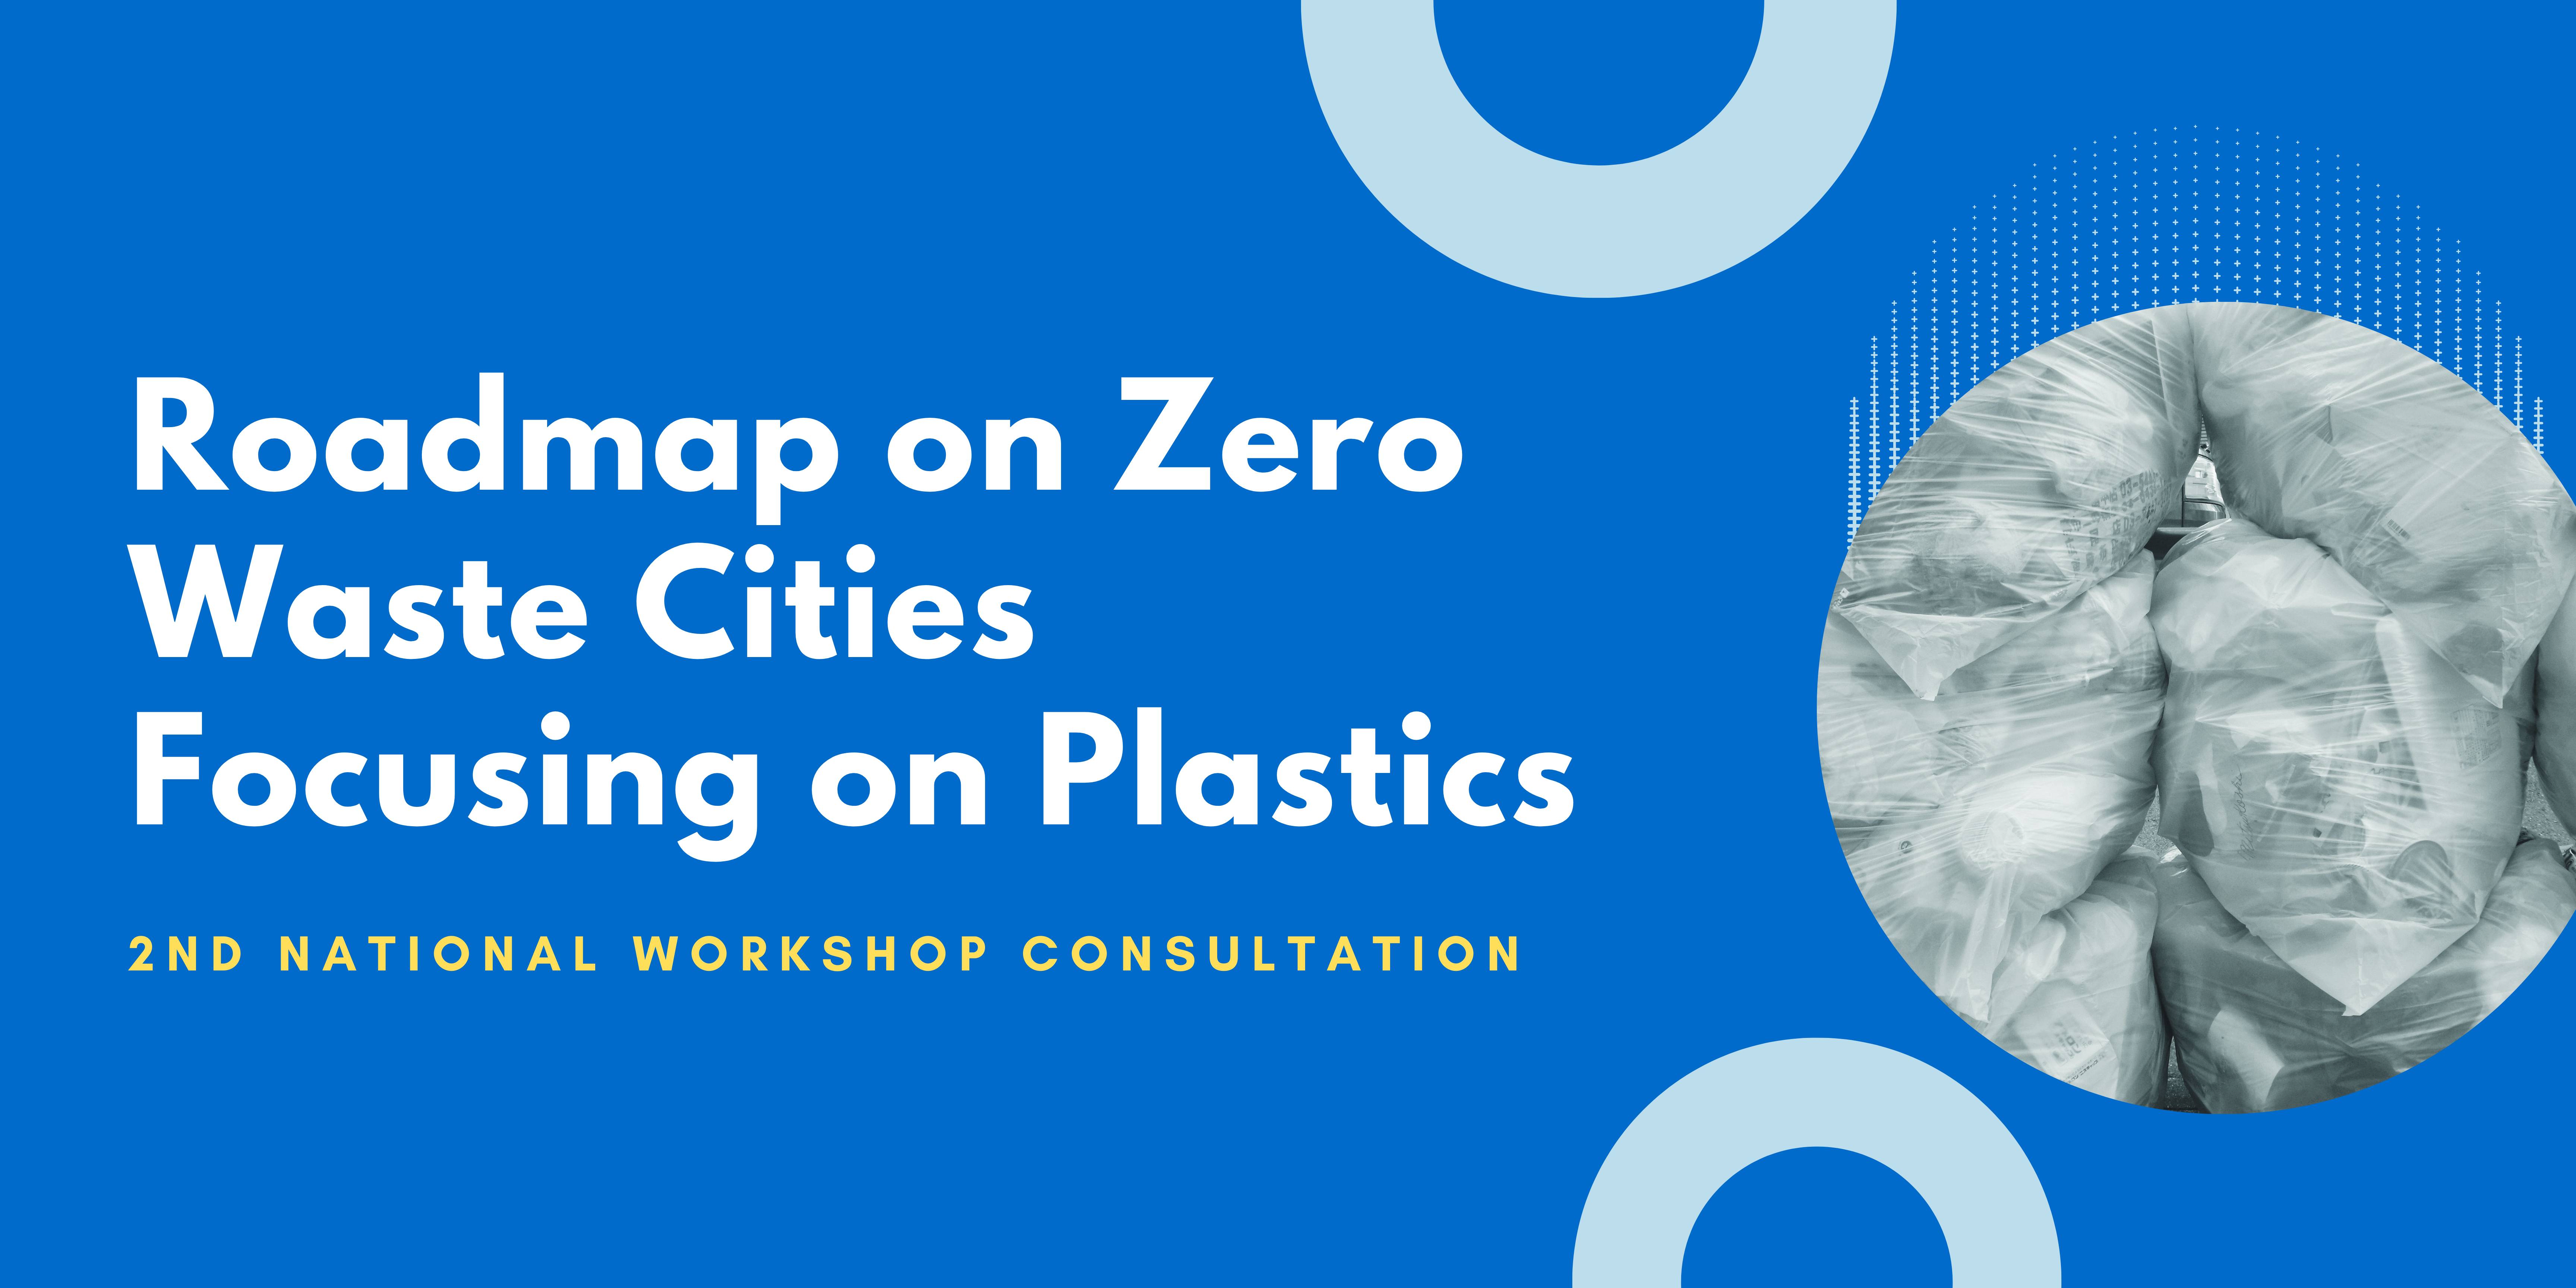 Roadmap on Zero Waste Cities focusing on Plastics in China